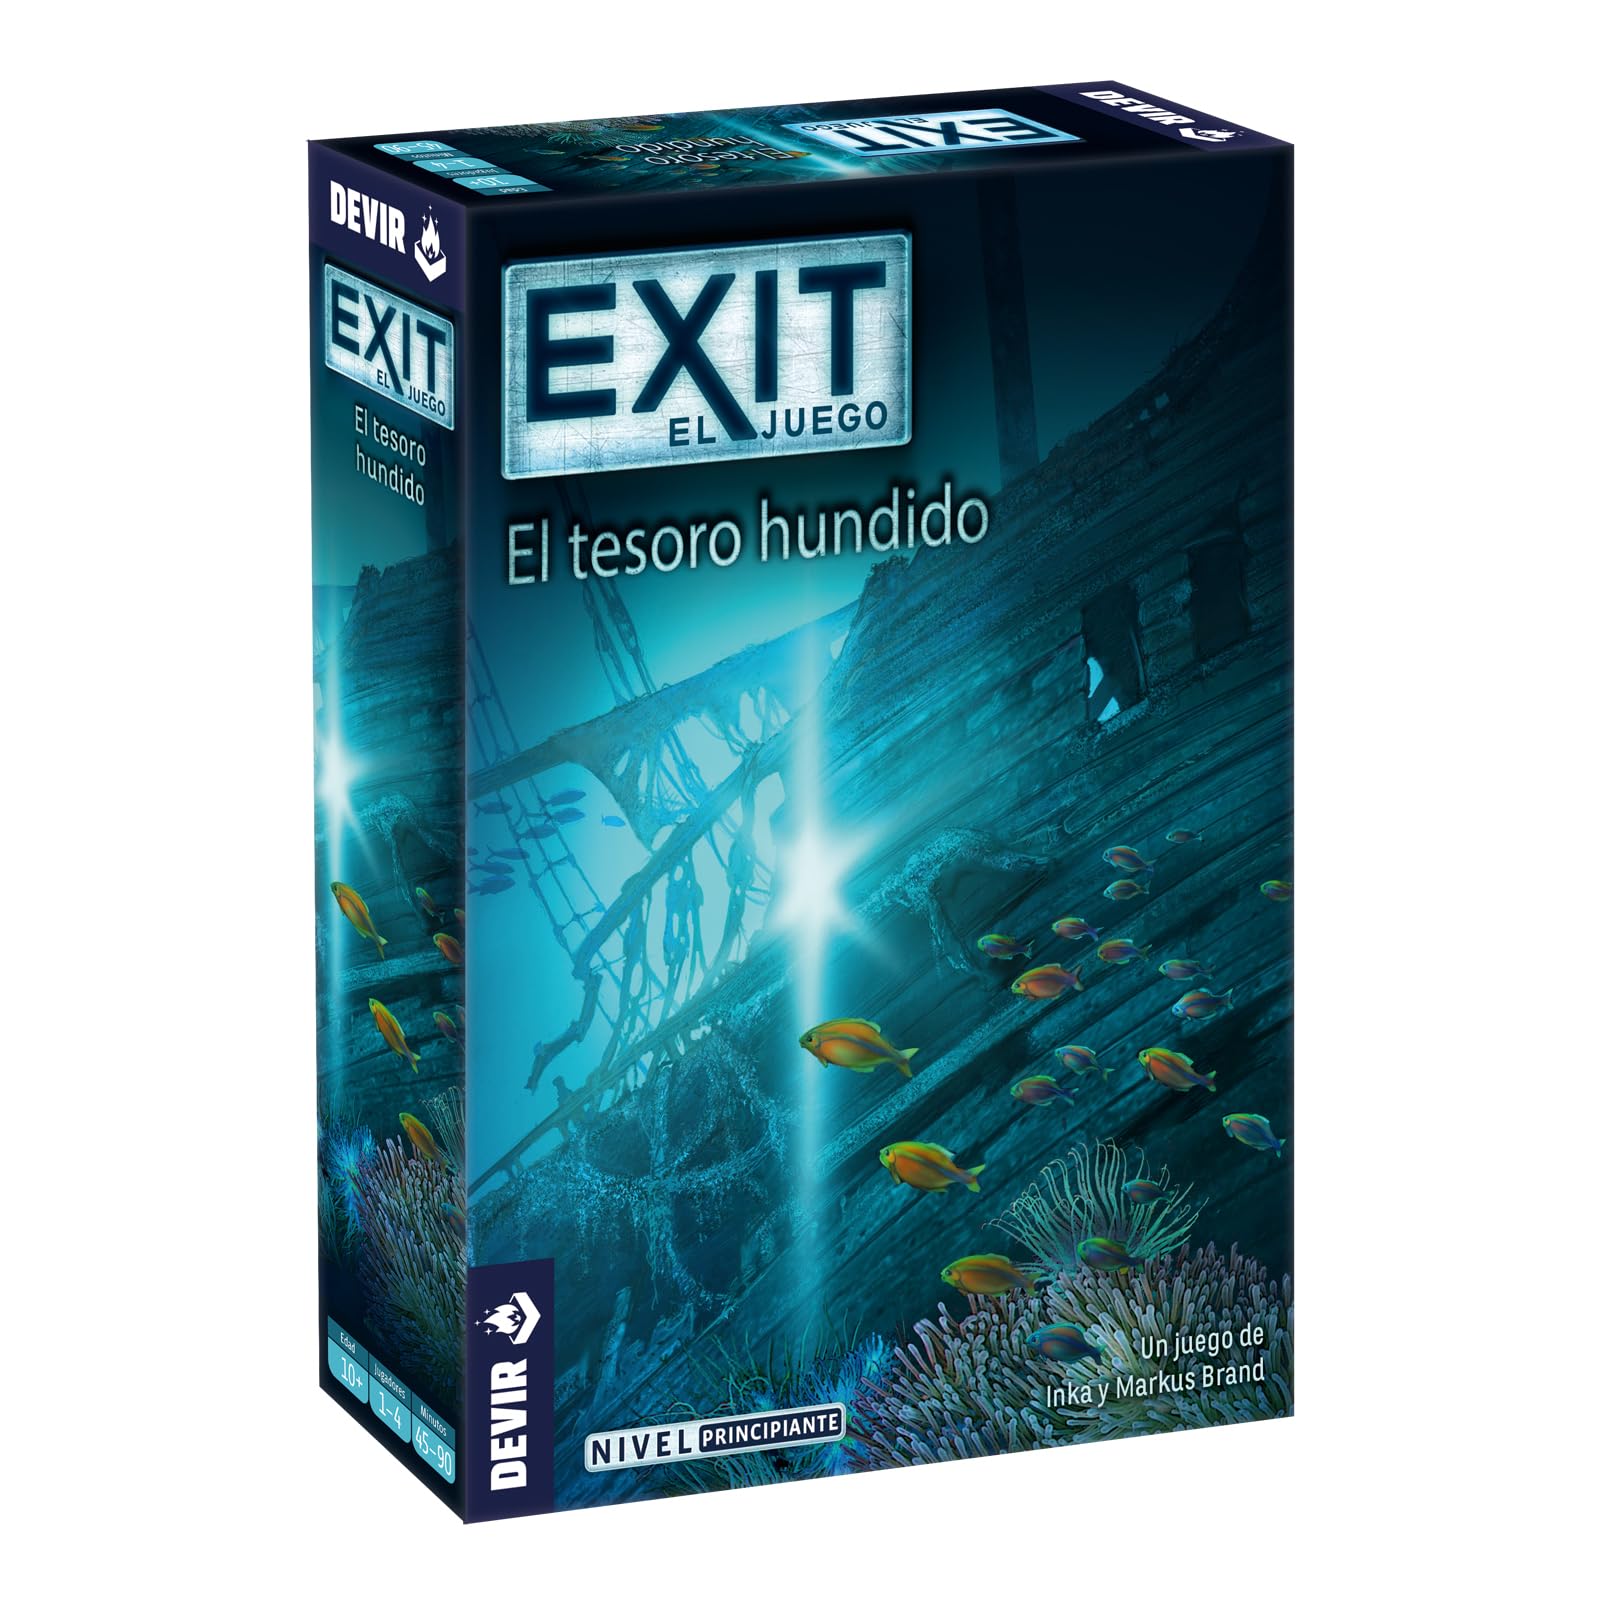 Devir Exit Escape-Room-Spiel, 227123, Bunt, One Size